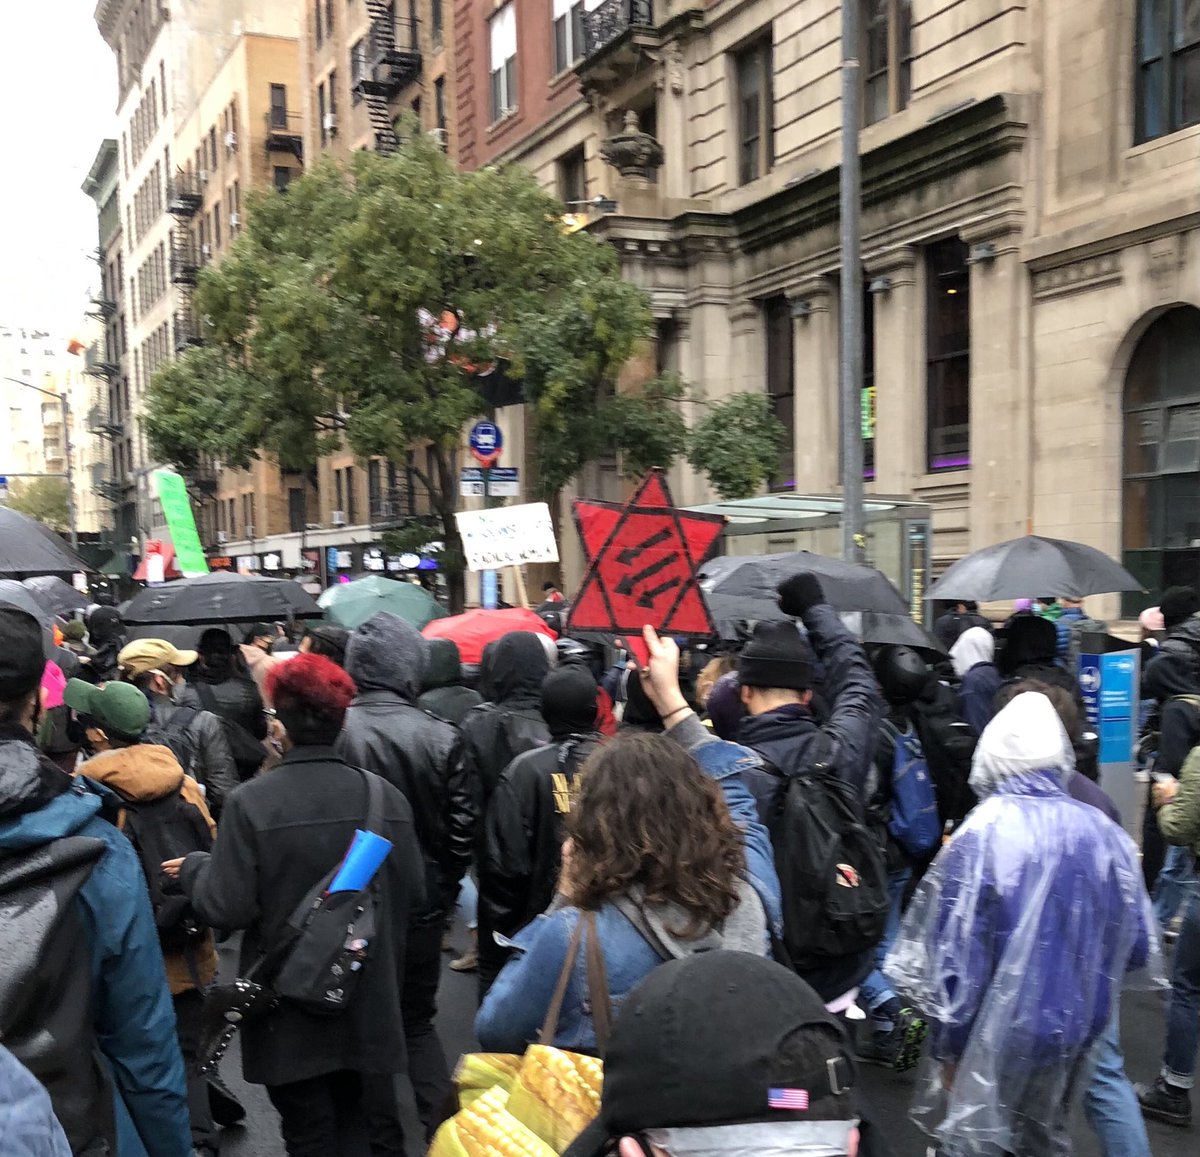 Anti fascist march in NYC. #Chelsea